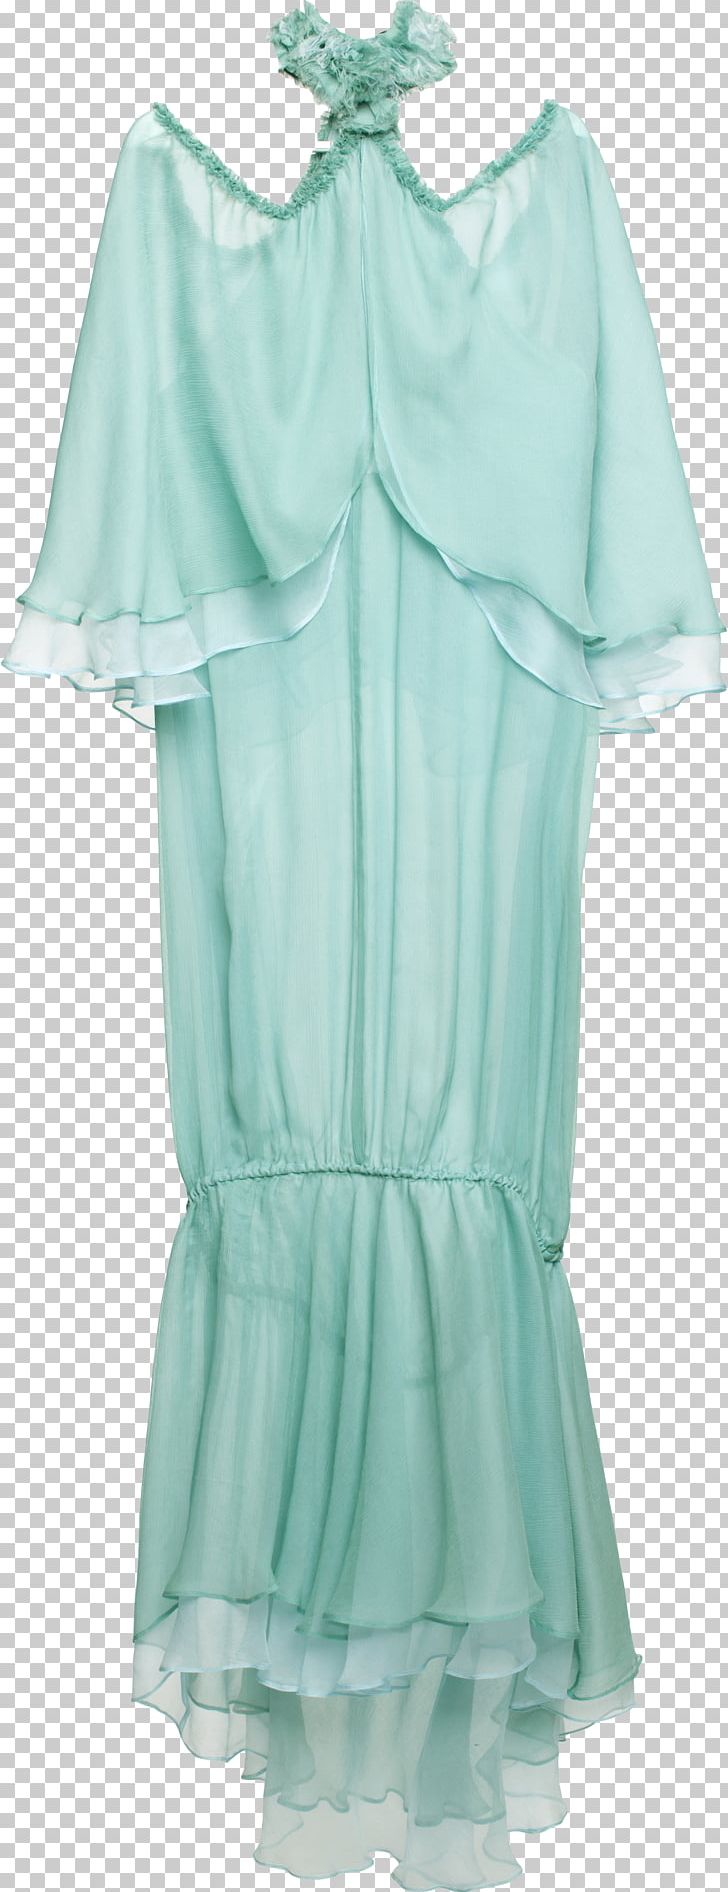 Shoulder Sleeve Dress Messenger Bags Ruffle PNG, Clipart, Aqua, Bag, Blouse, Cloth, Clothing Free PNG Download